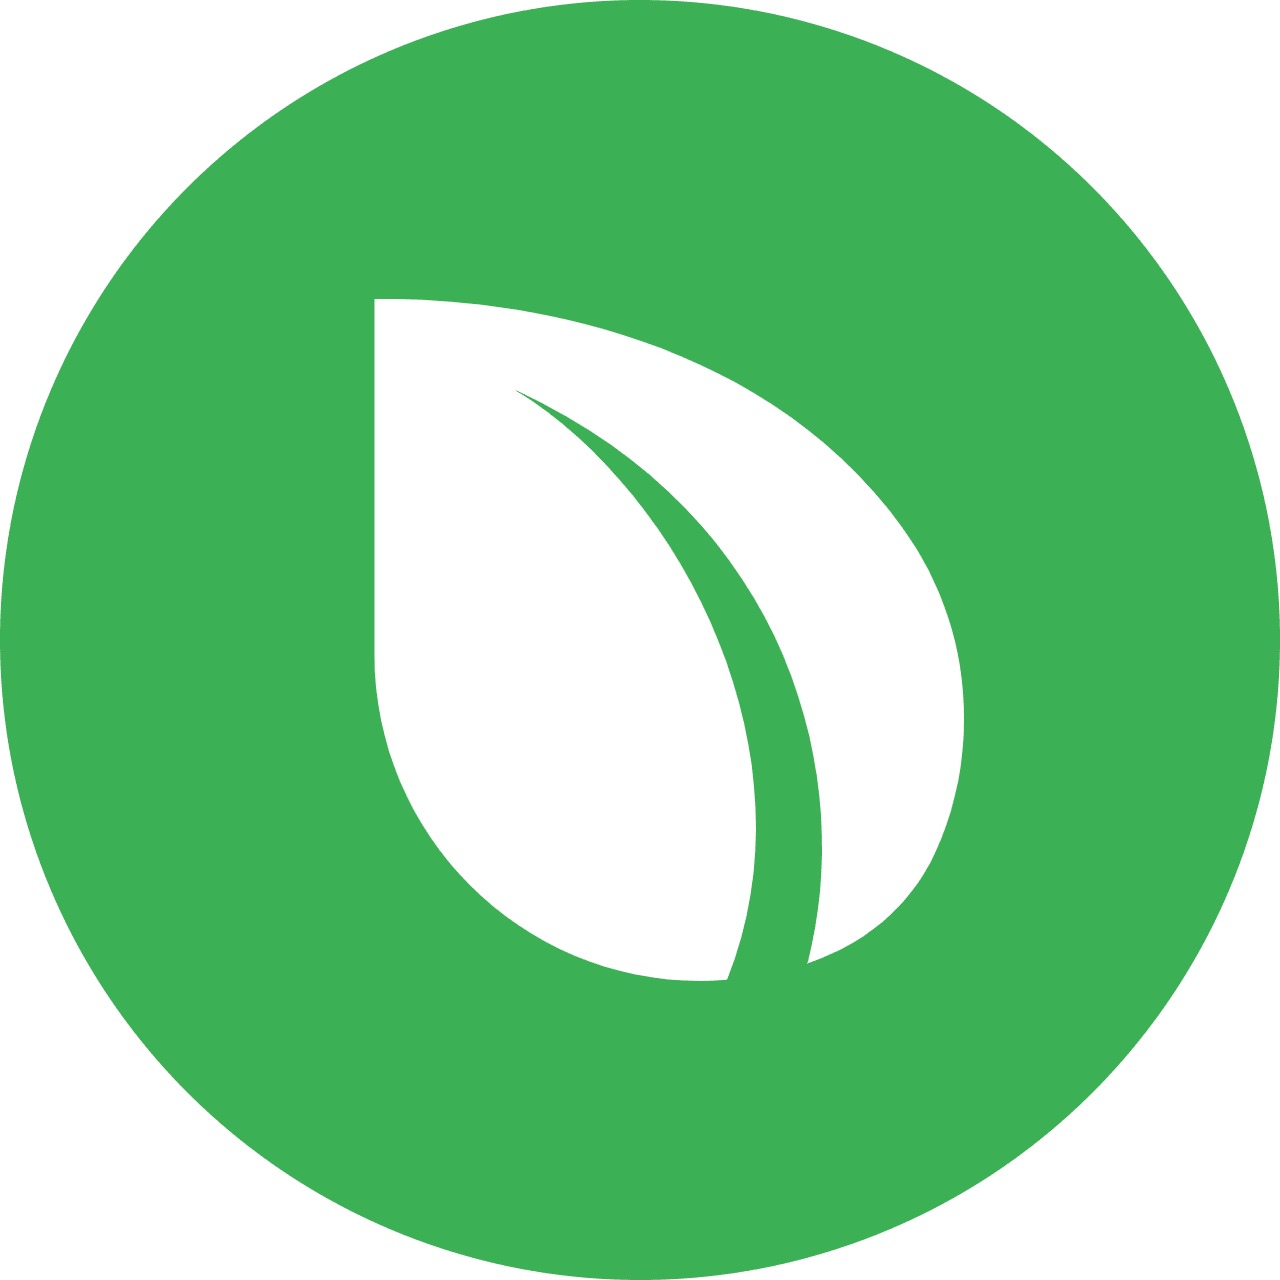 Peercoin logo in svg format